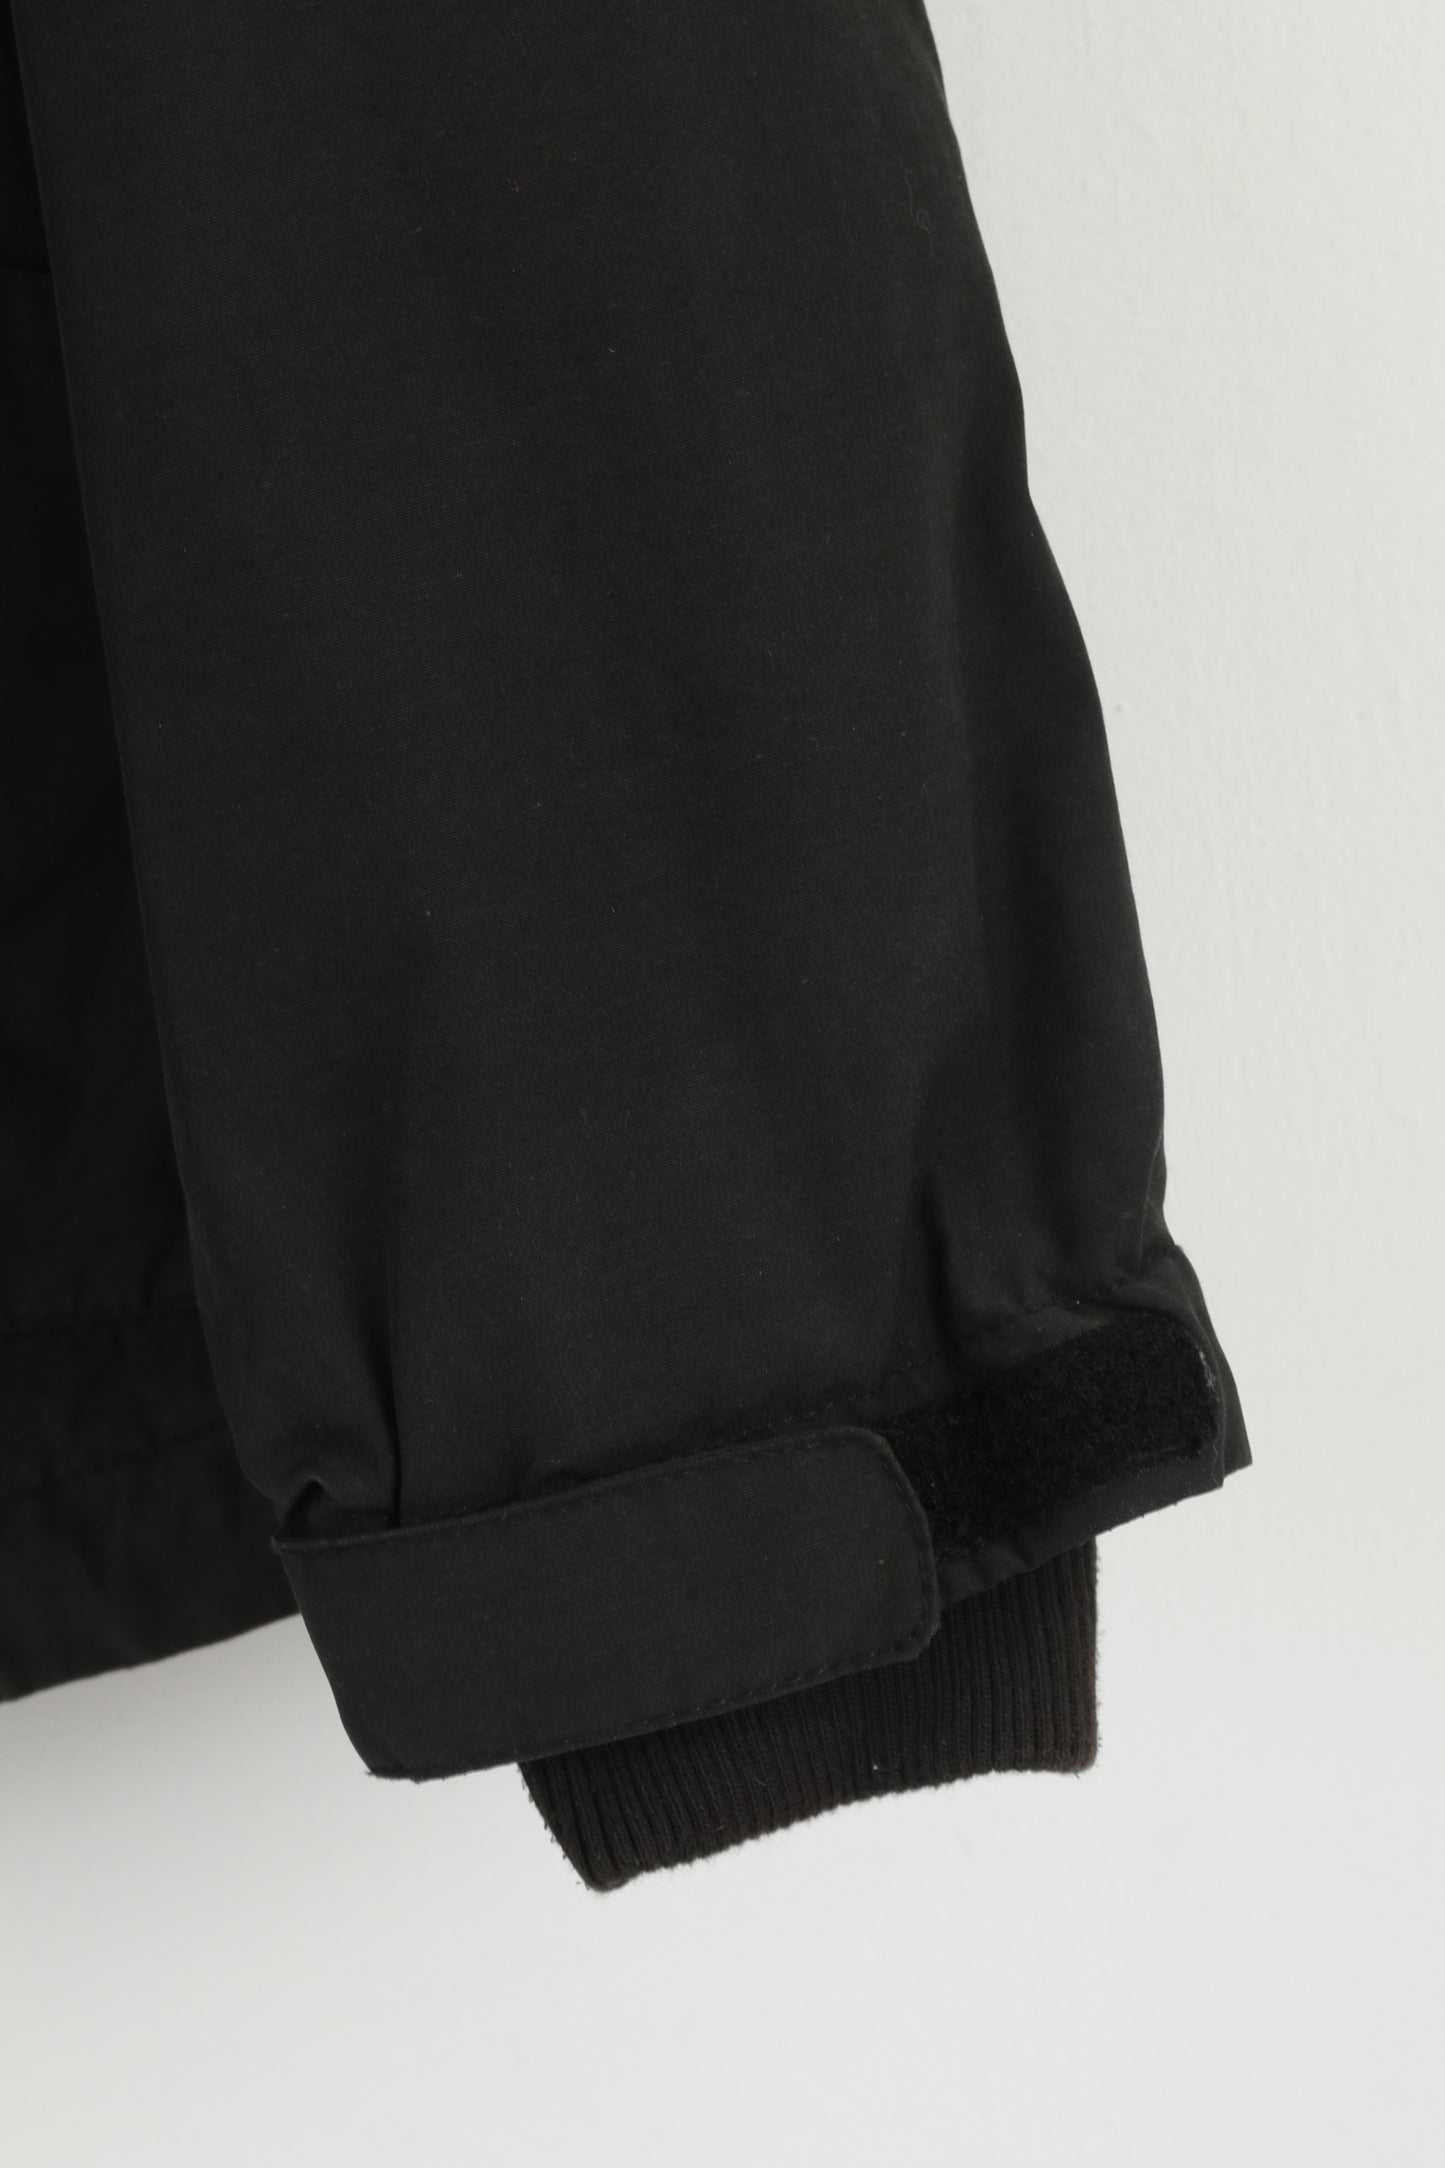 Henry Choice Men XL Jacket Black Dakota Pernament Denim Hood Fleece Lined Top